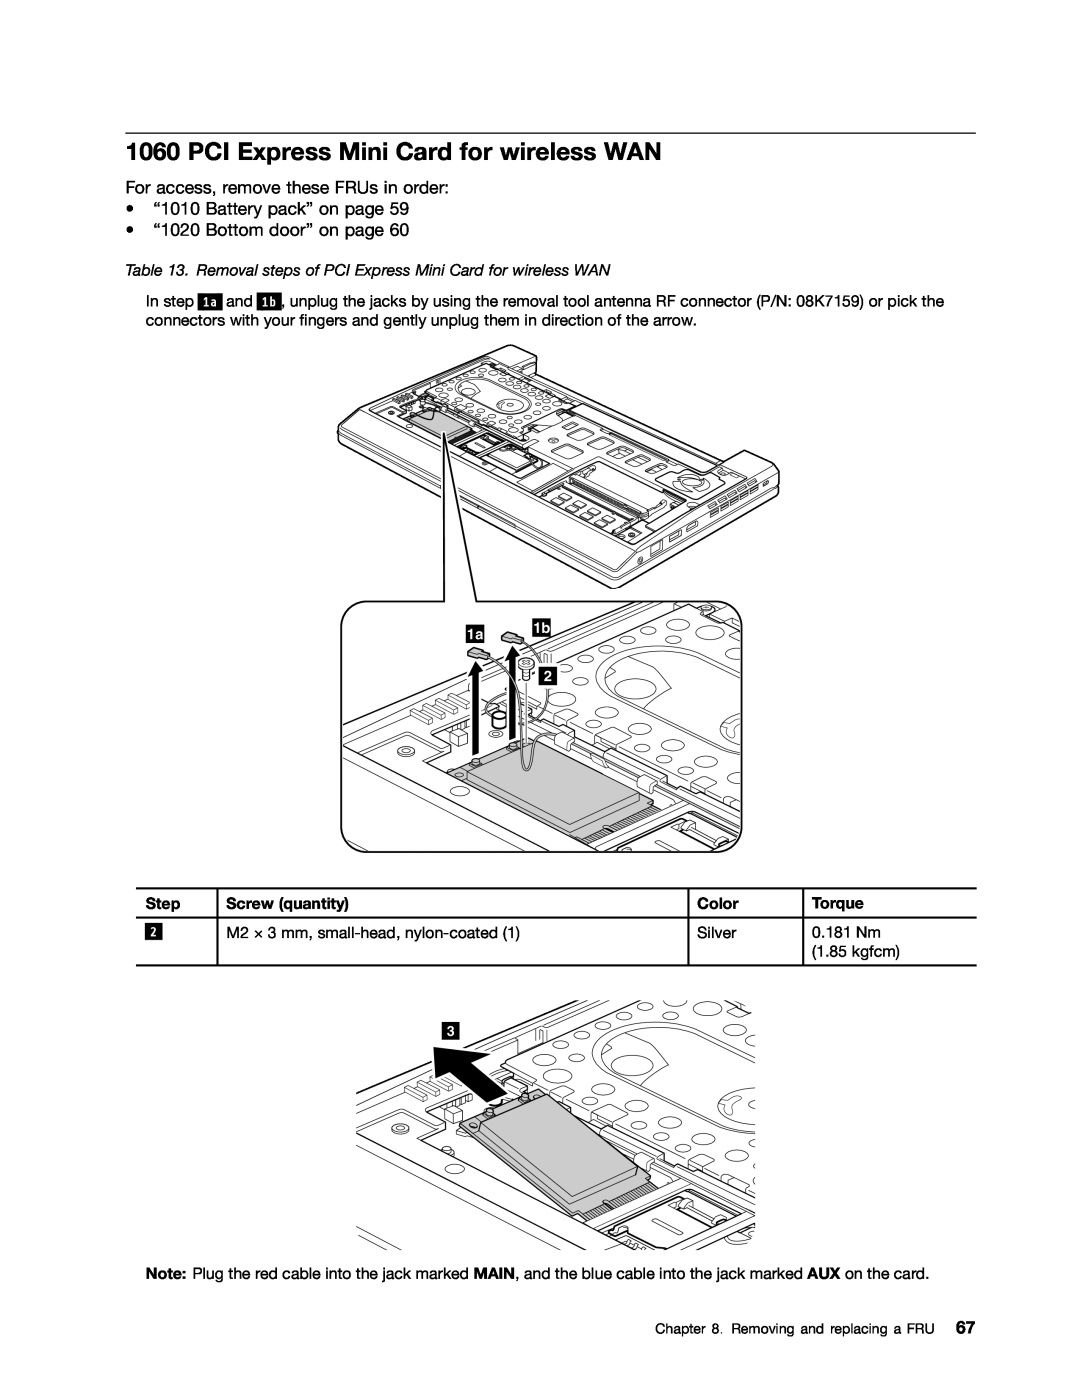 Lenovo E10 manual Removal steps of PCI Express Mini Card for wireless WAN 